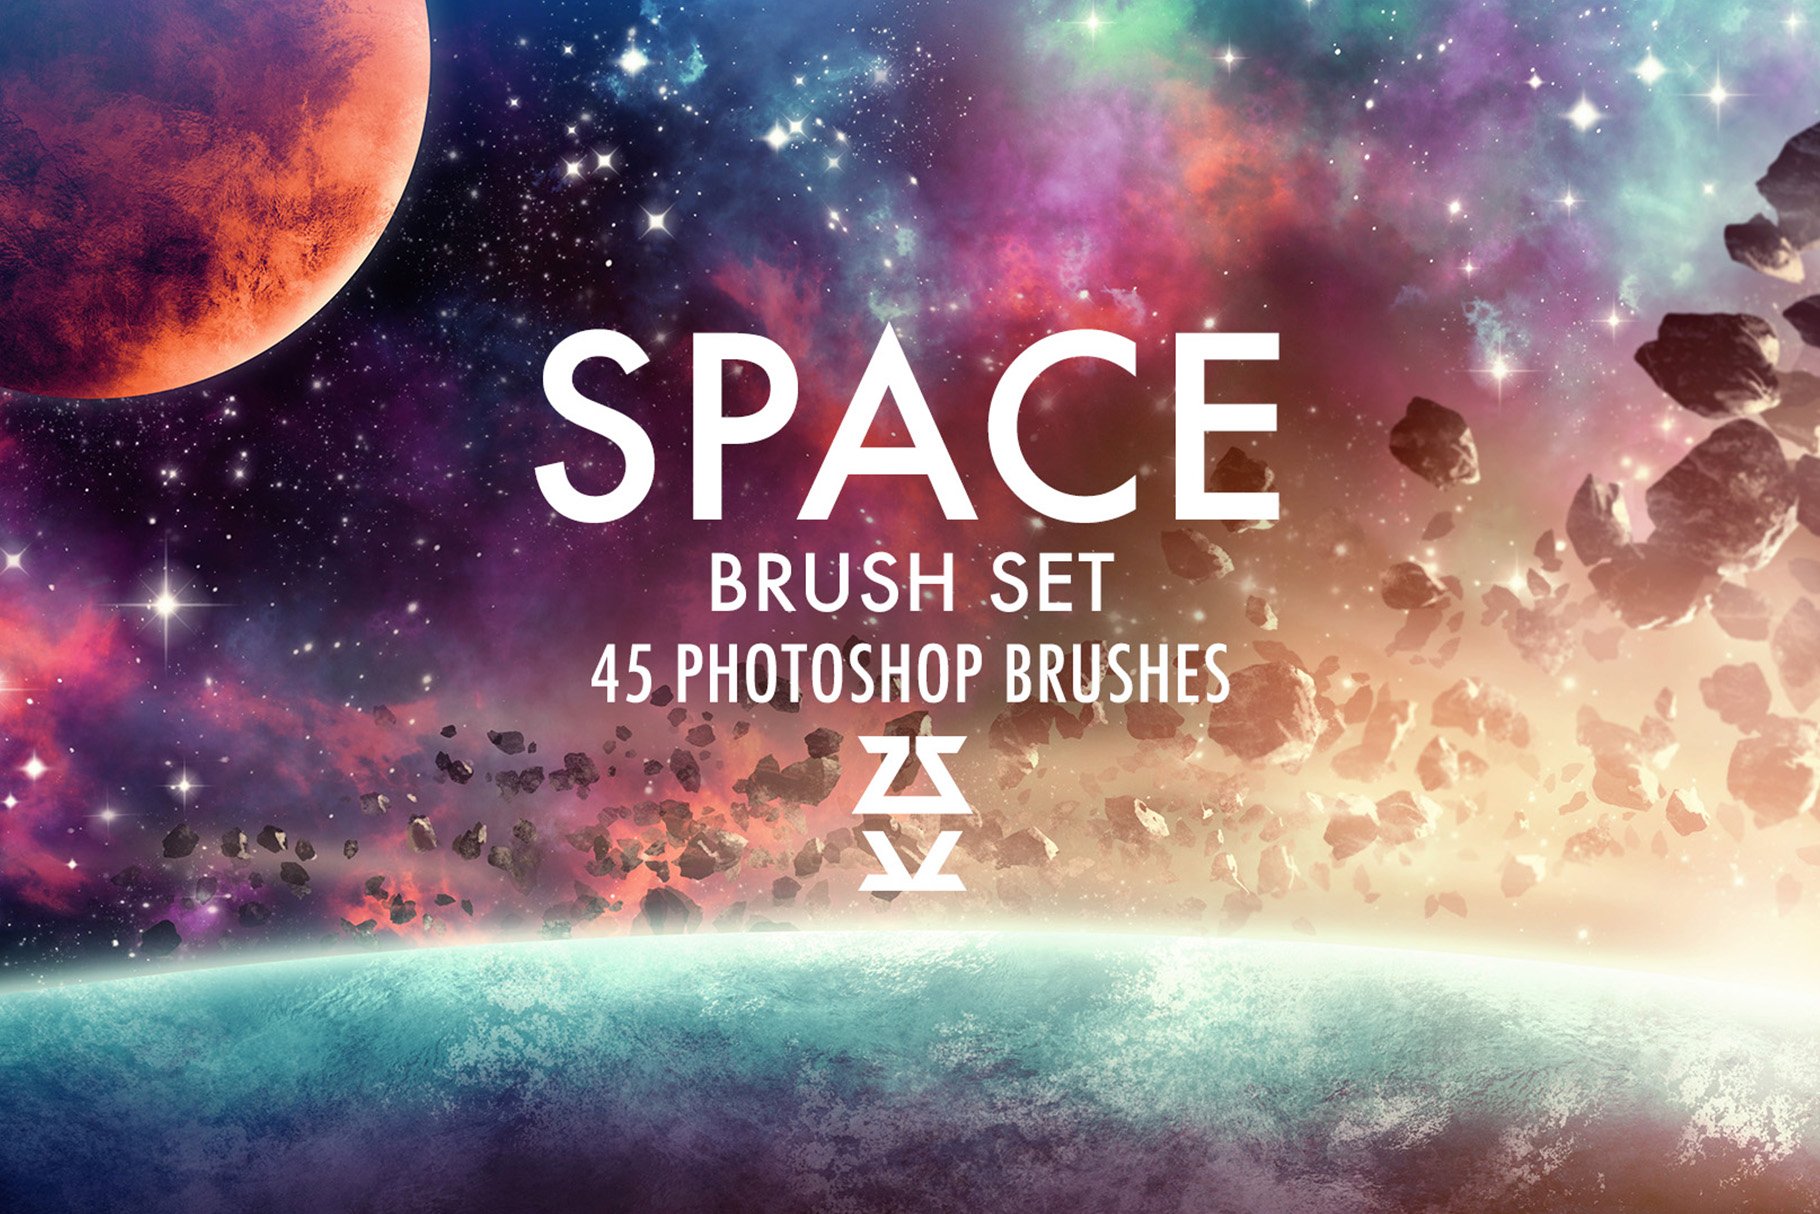 Space Brush Setcover image.